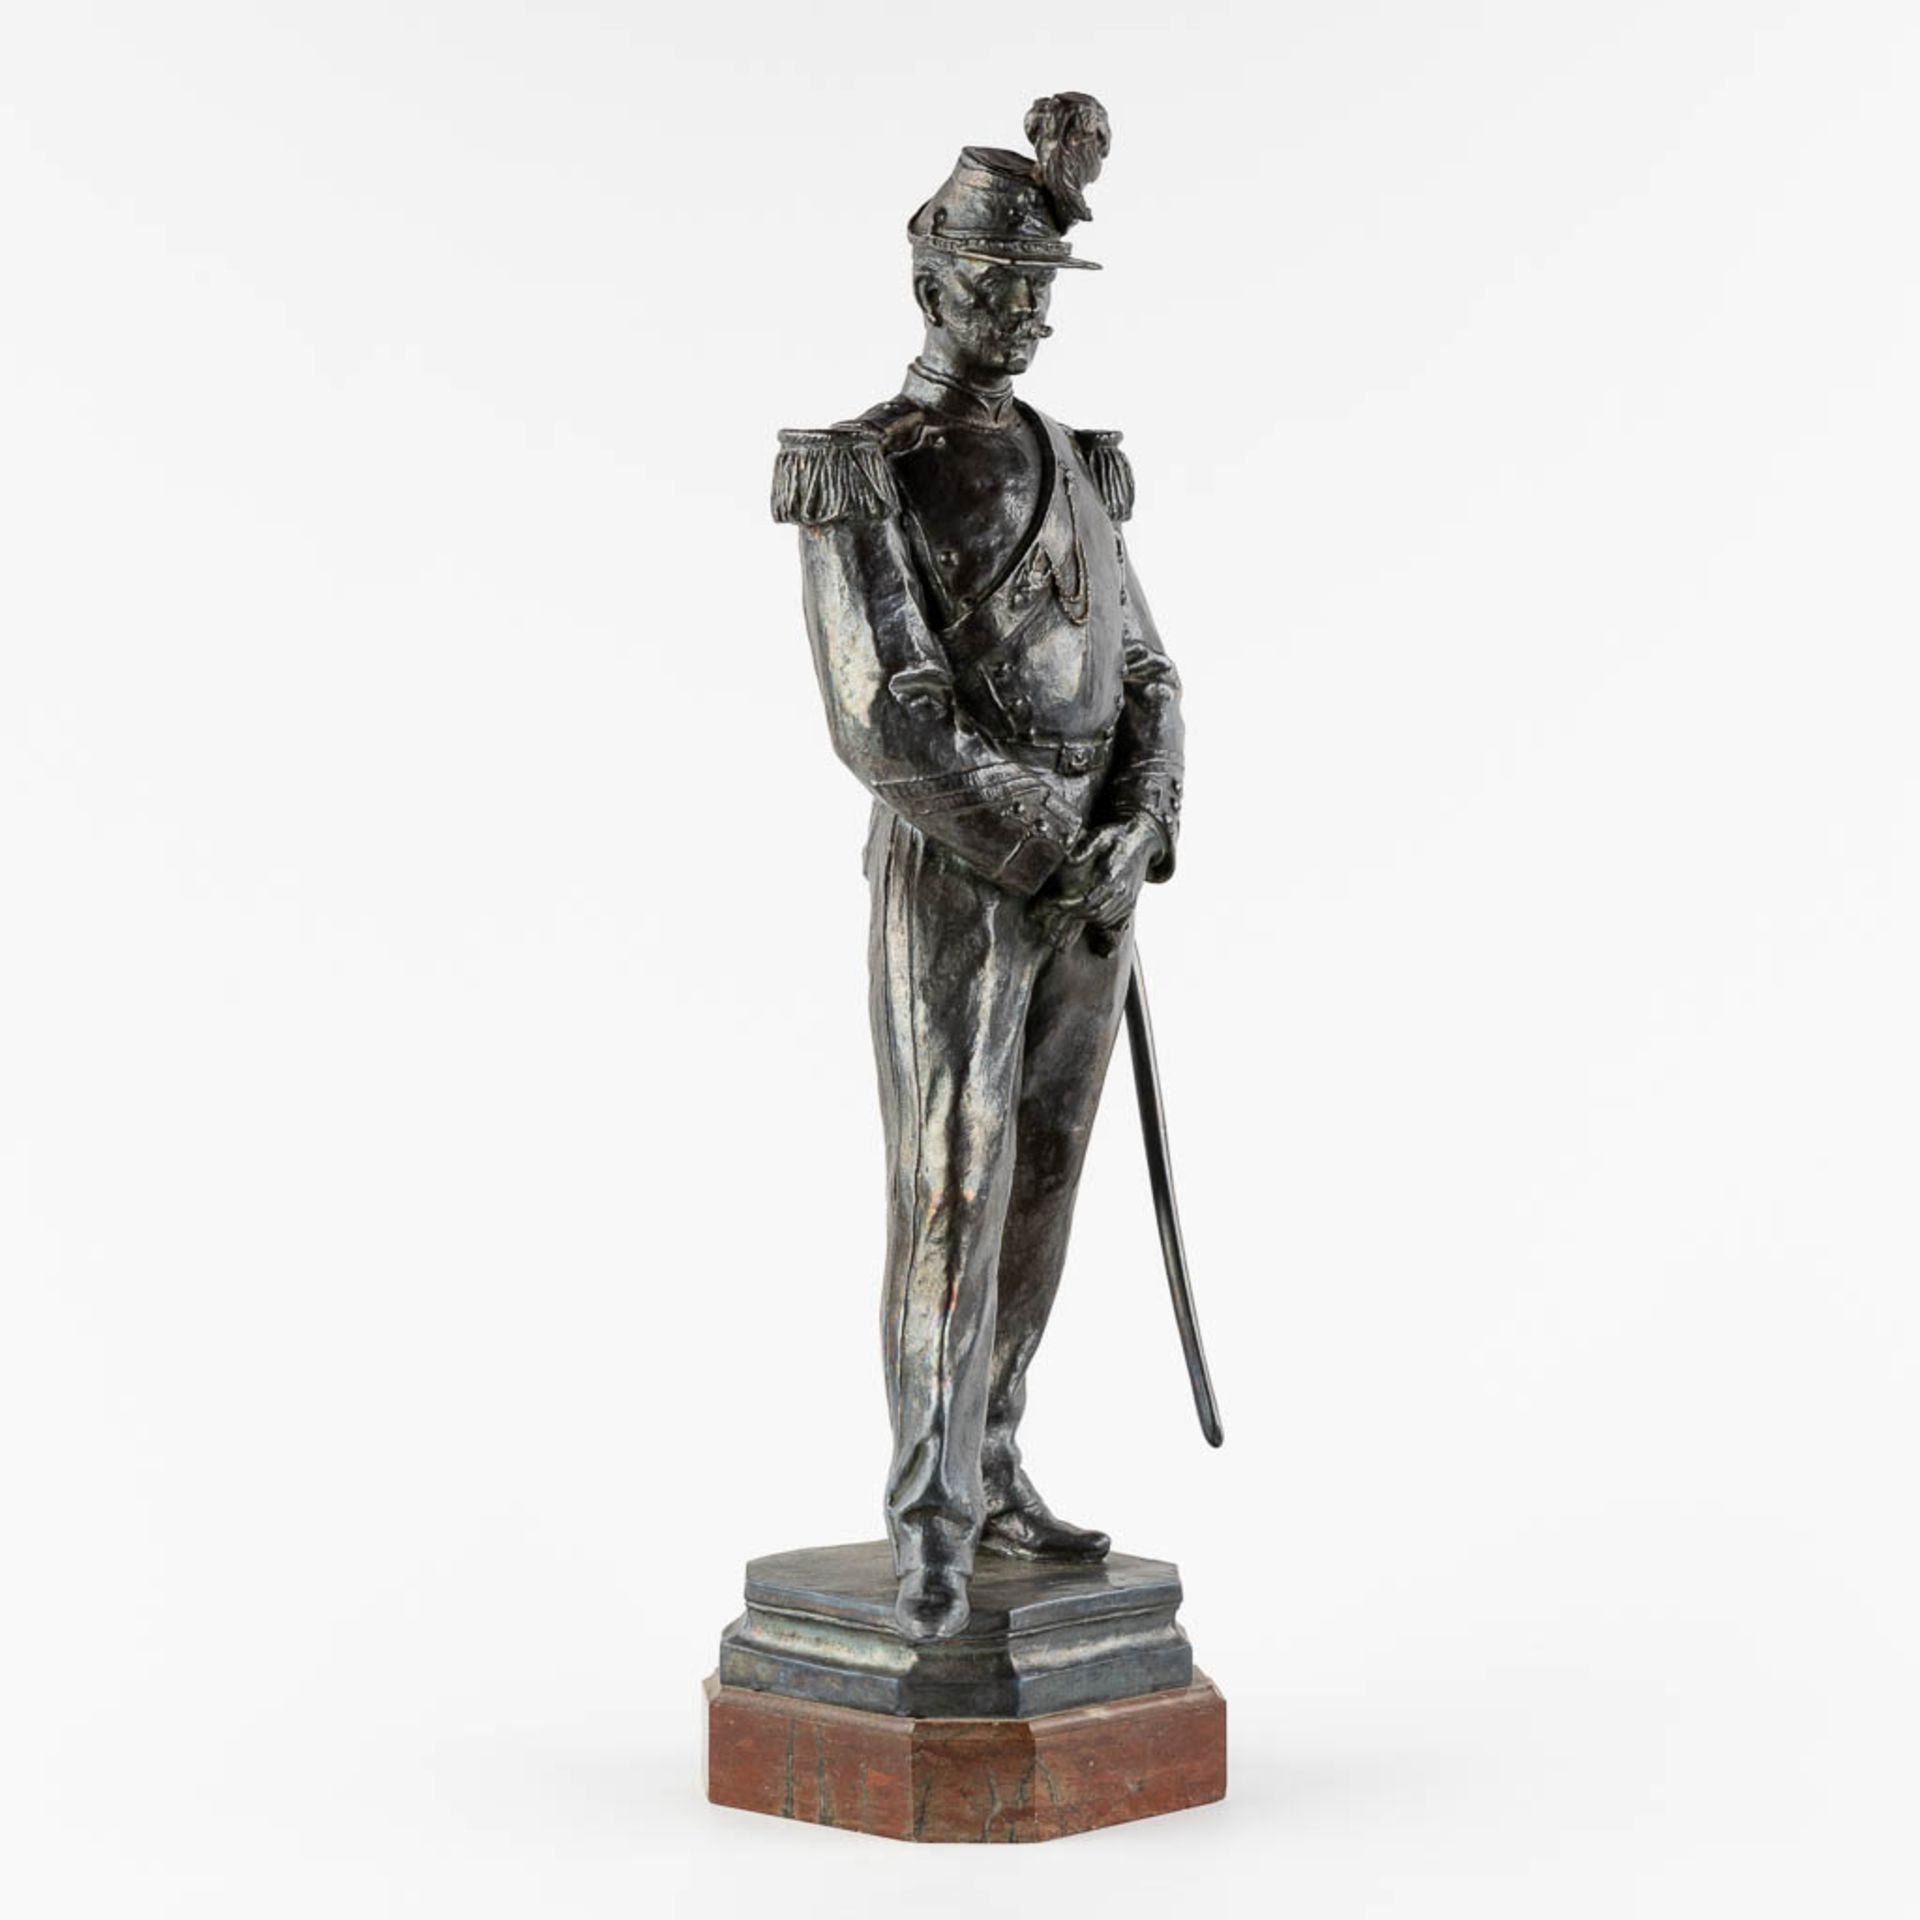 Léon MIGNON (1847-1898) 'French Soldier' patinated bronze, foundry mark. (L:15 x W:17 x H:55 cm)